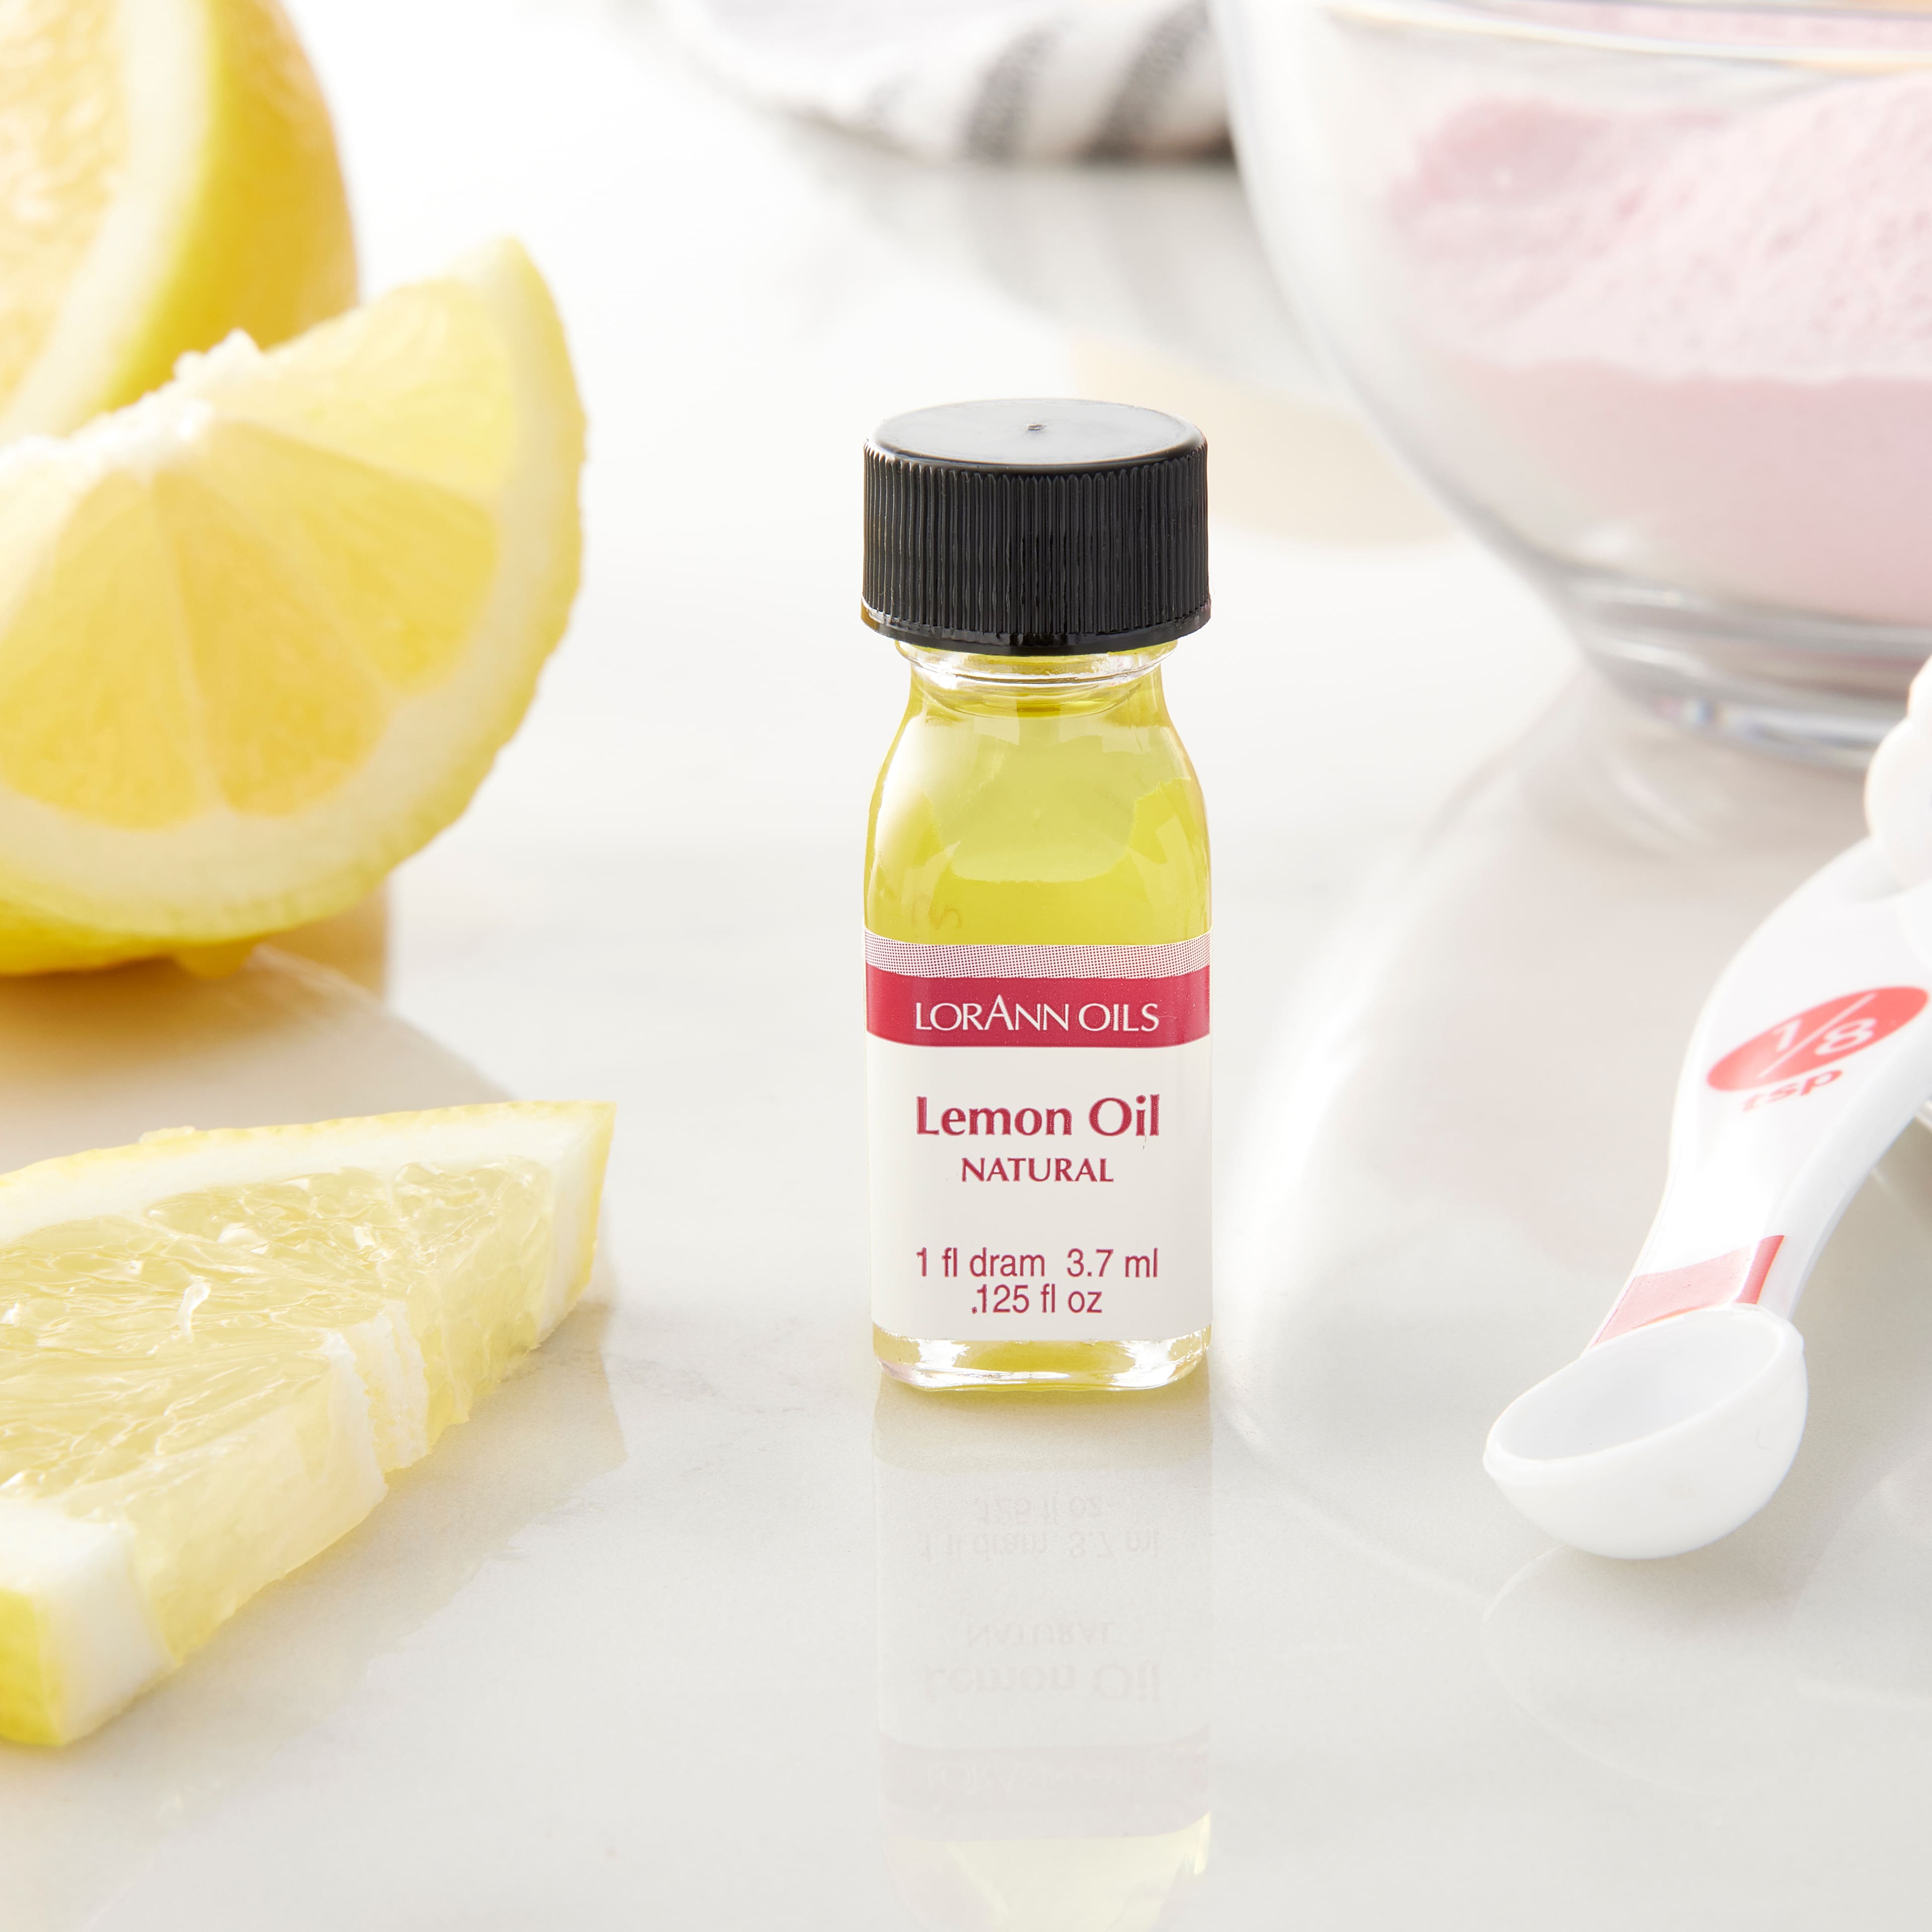 LorAnn Oils Natural Lemon Oil, 2ct.